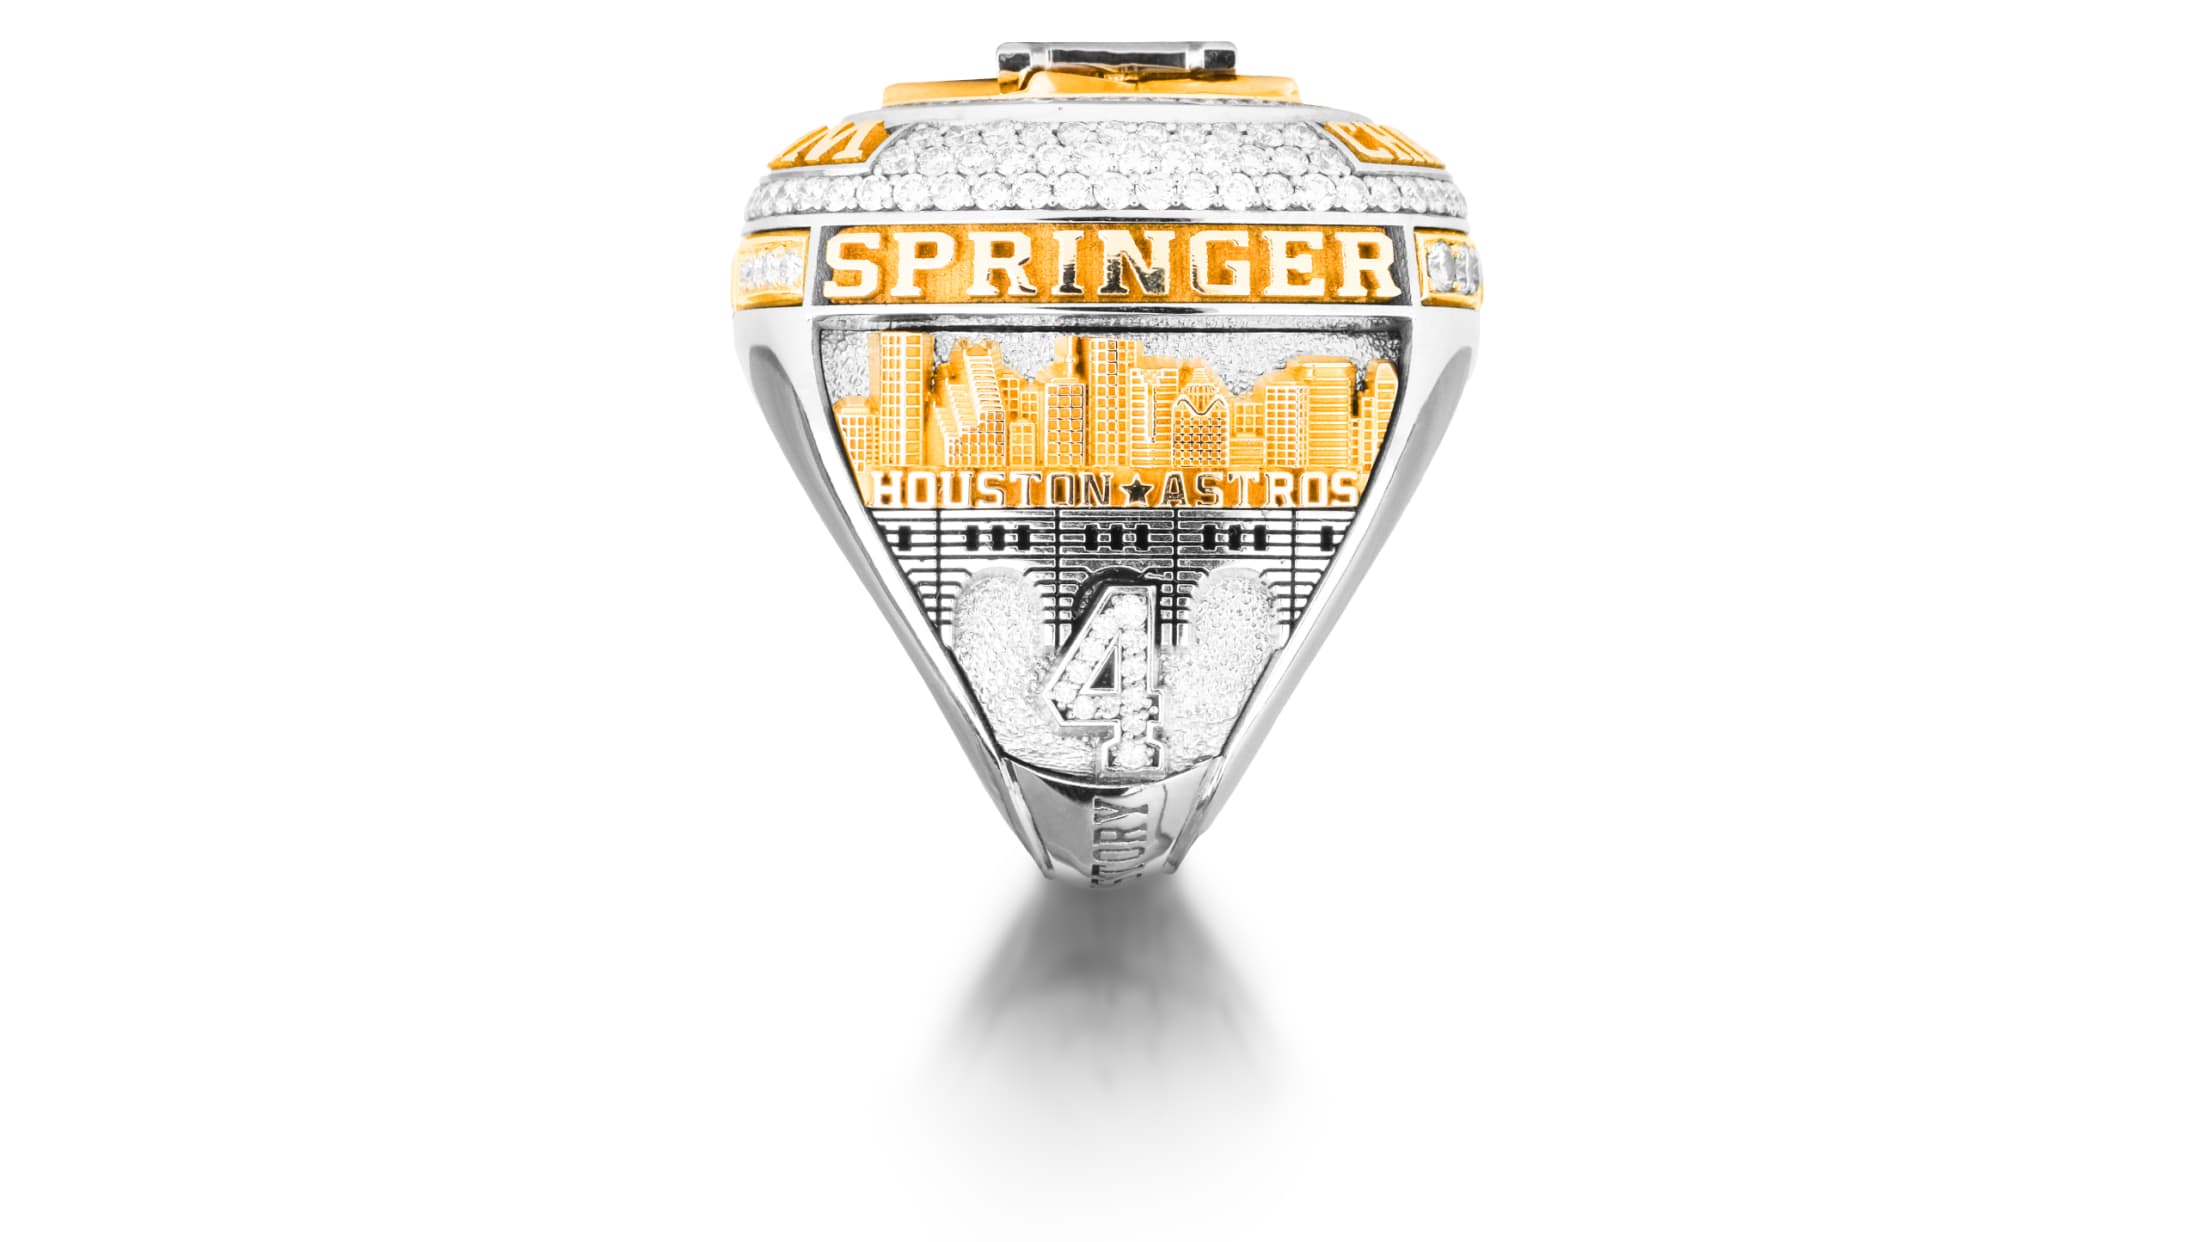 Houston Astros World Series Ring (2017) - Premium Series – Rings